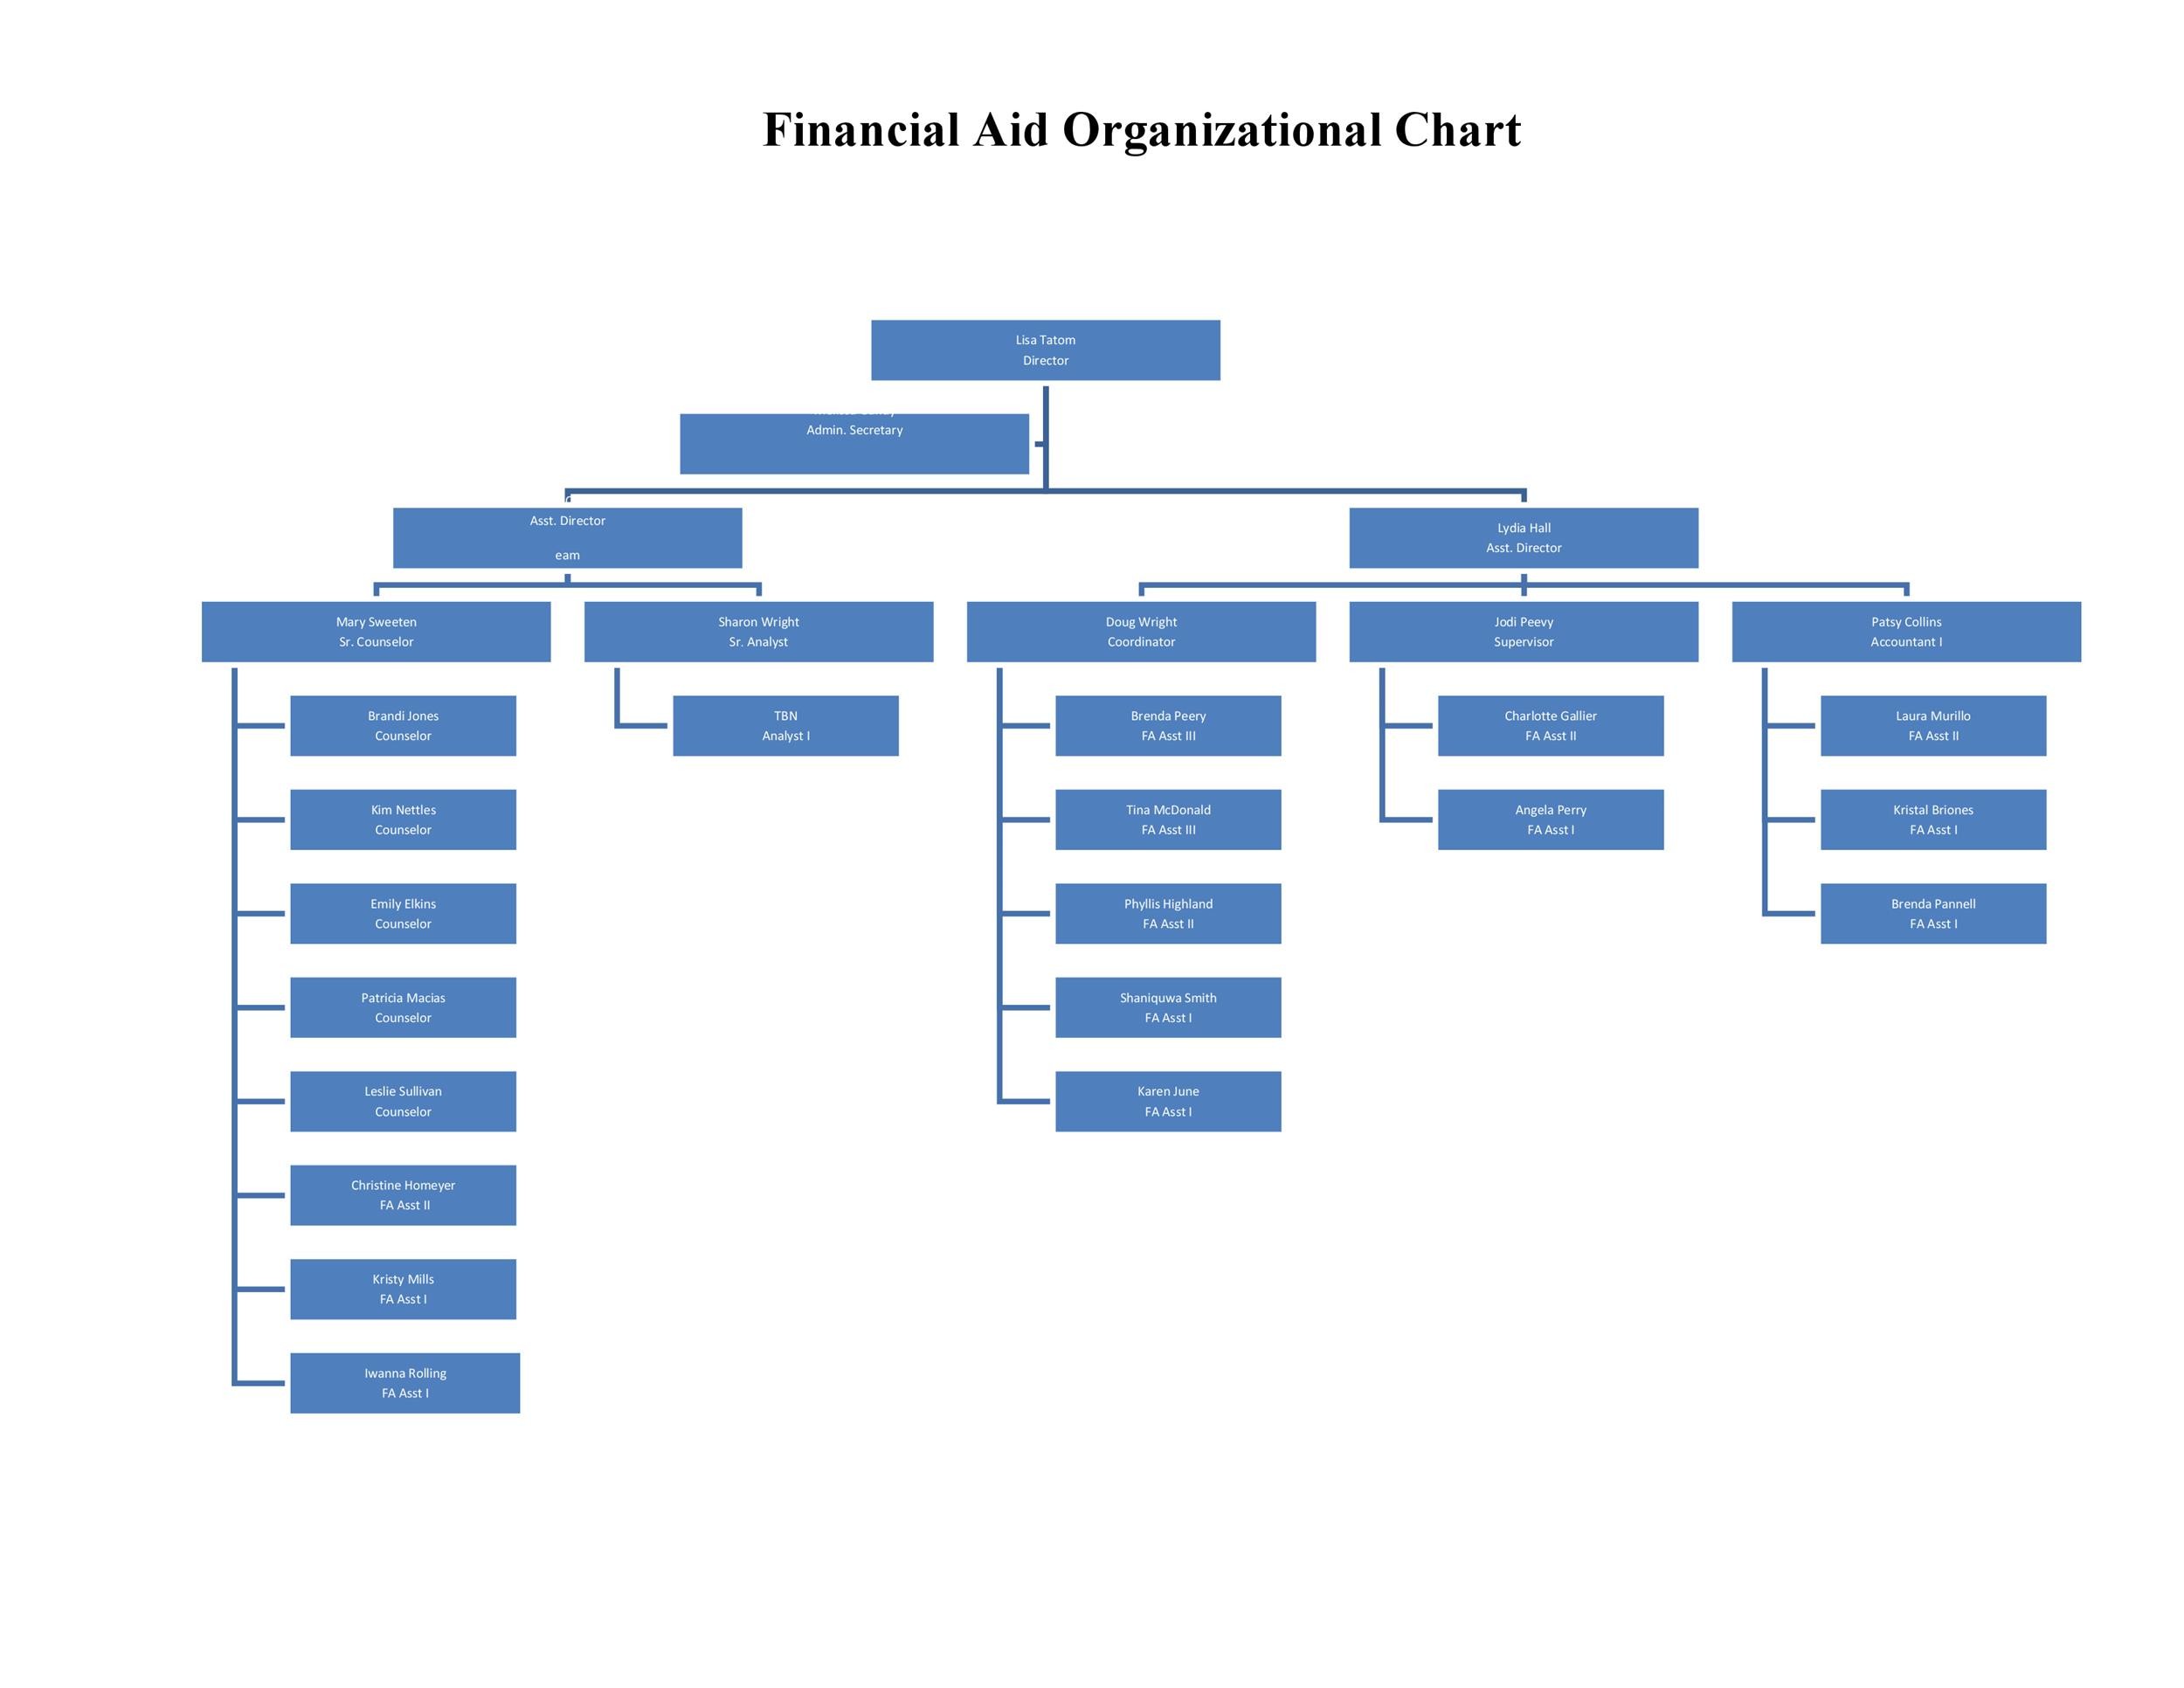 41 Organizational Chart Templates (Word, Excel, PowerPoint, PSD)